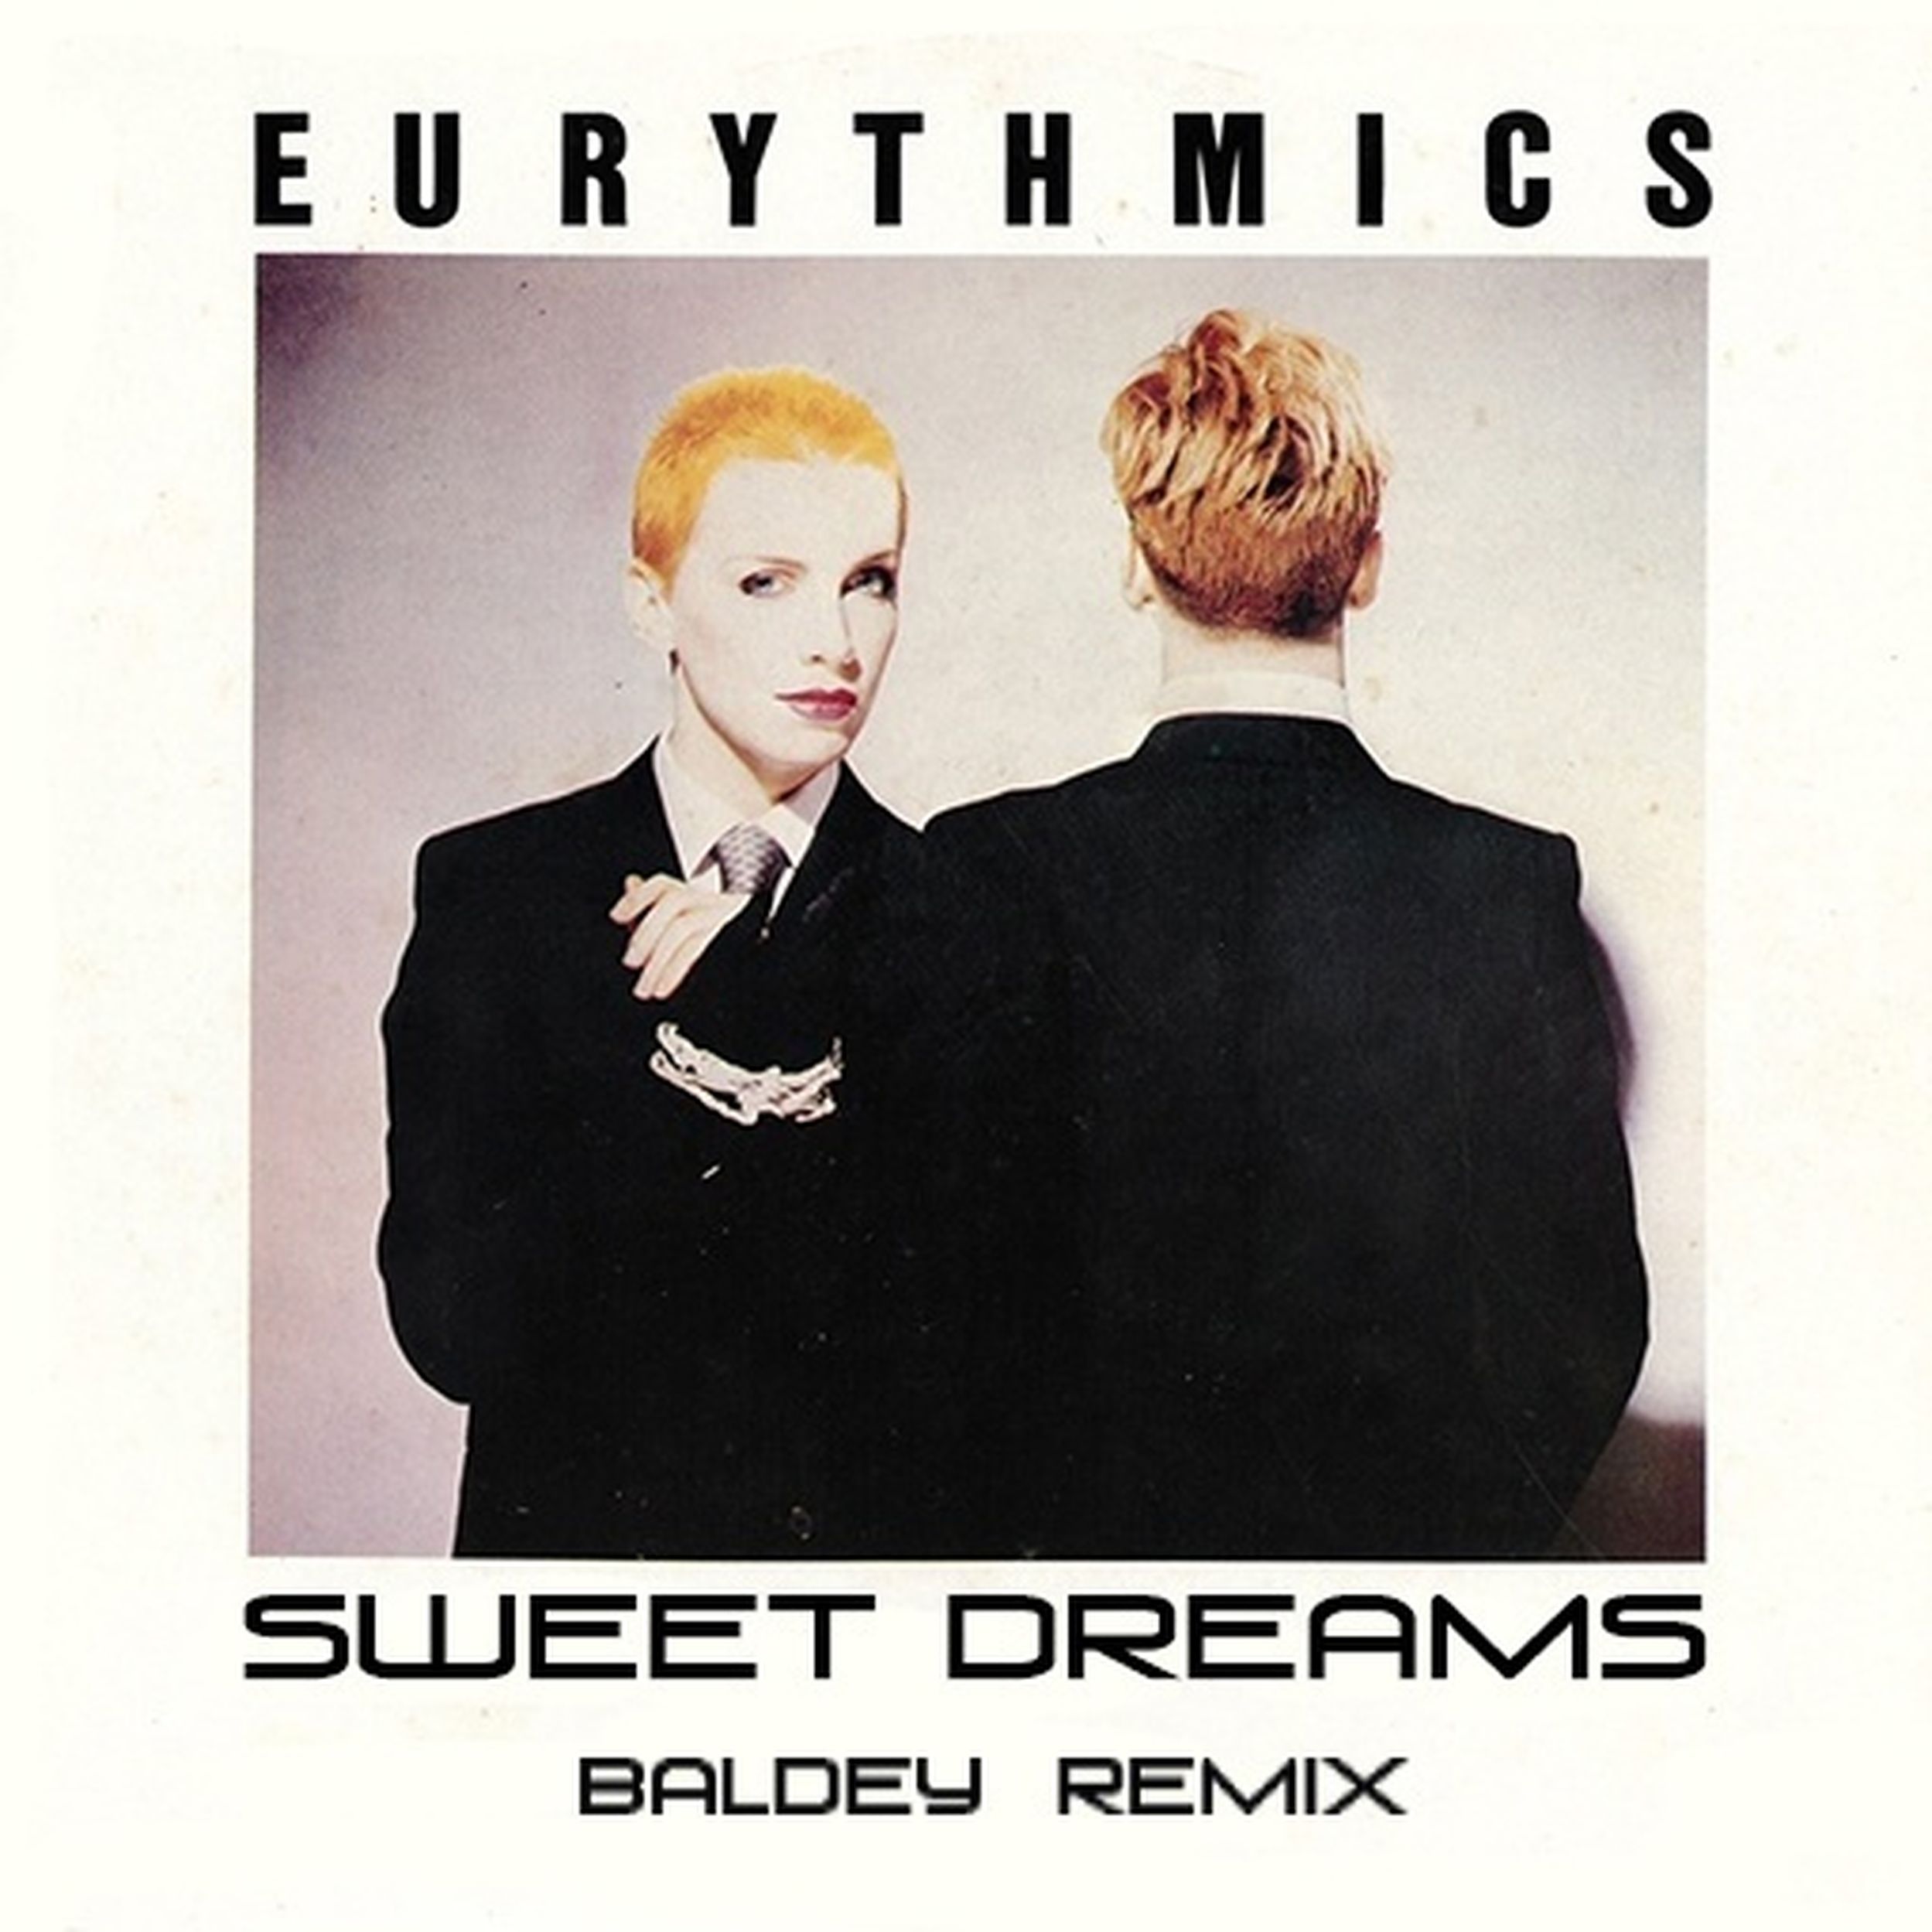 This dreams песня. Eurythmics Энни Леннокс. Eurythmics обложка. Eurythmics, Annie Lennox, Dave Stewart - Sweet Dreams (are made of this). Eurythmics, Annie Lennox, Dave Stewart.